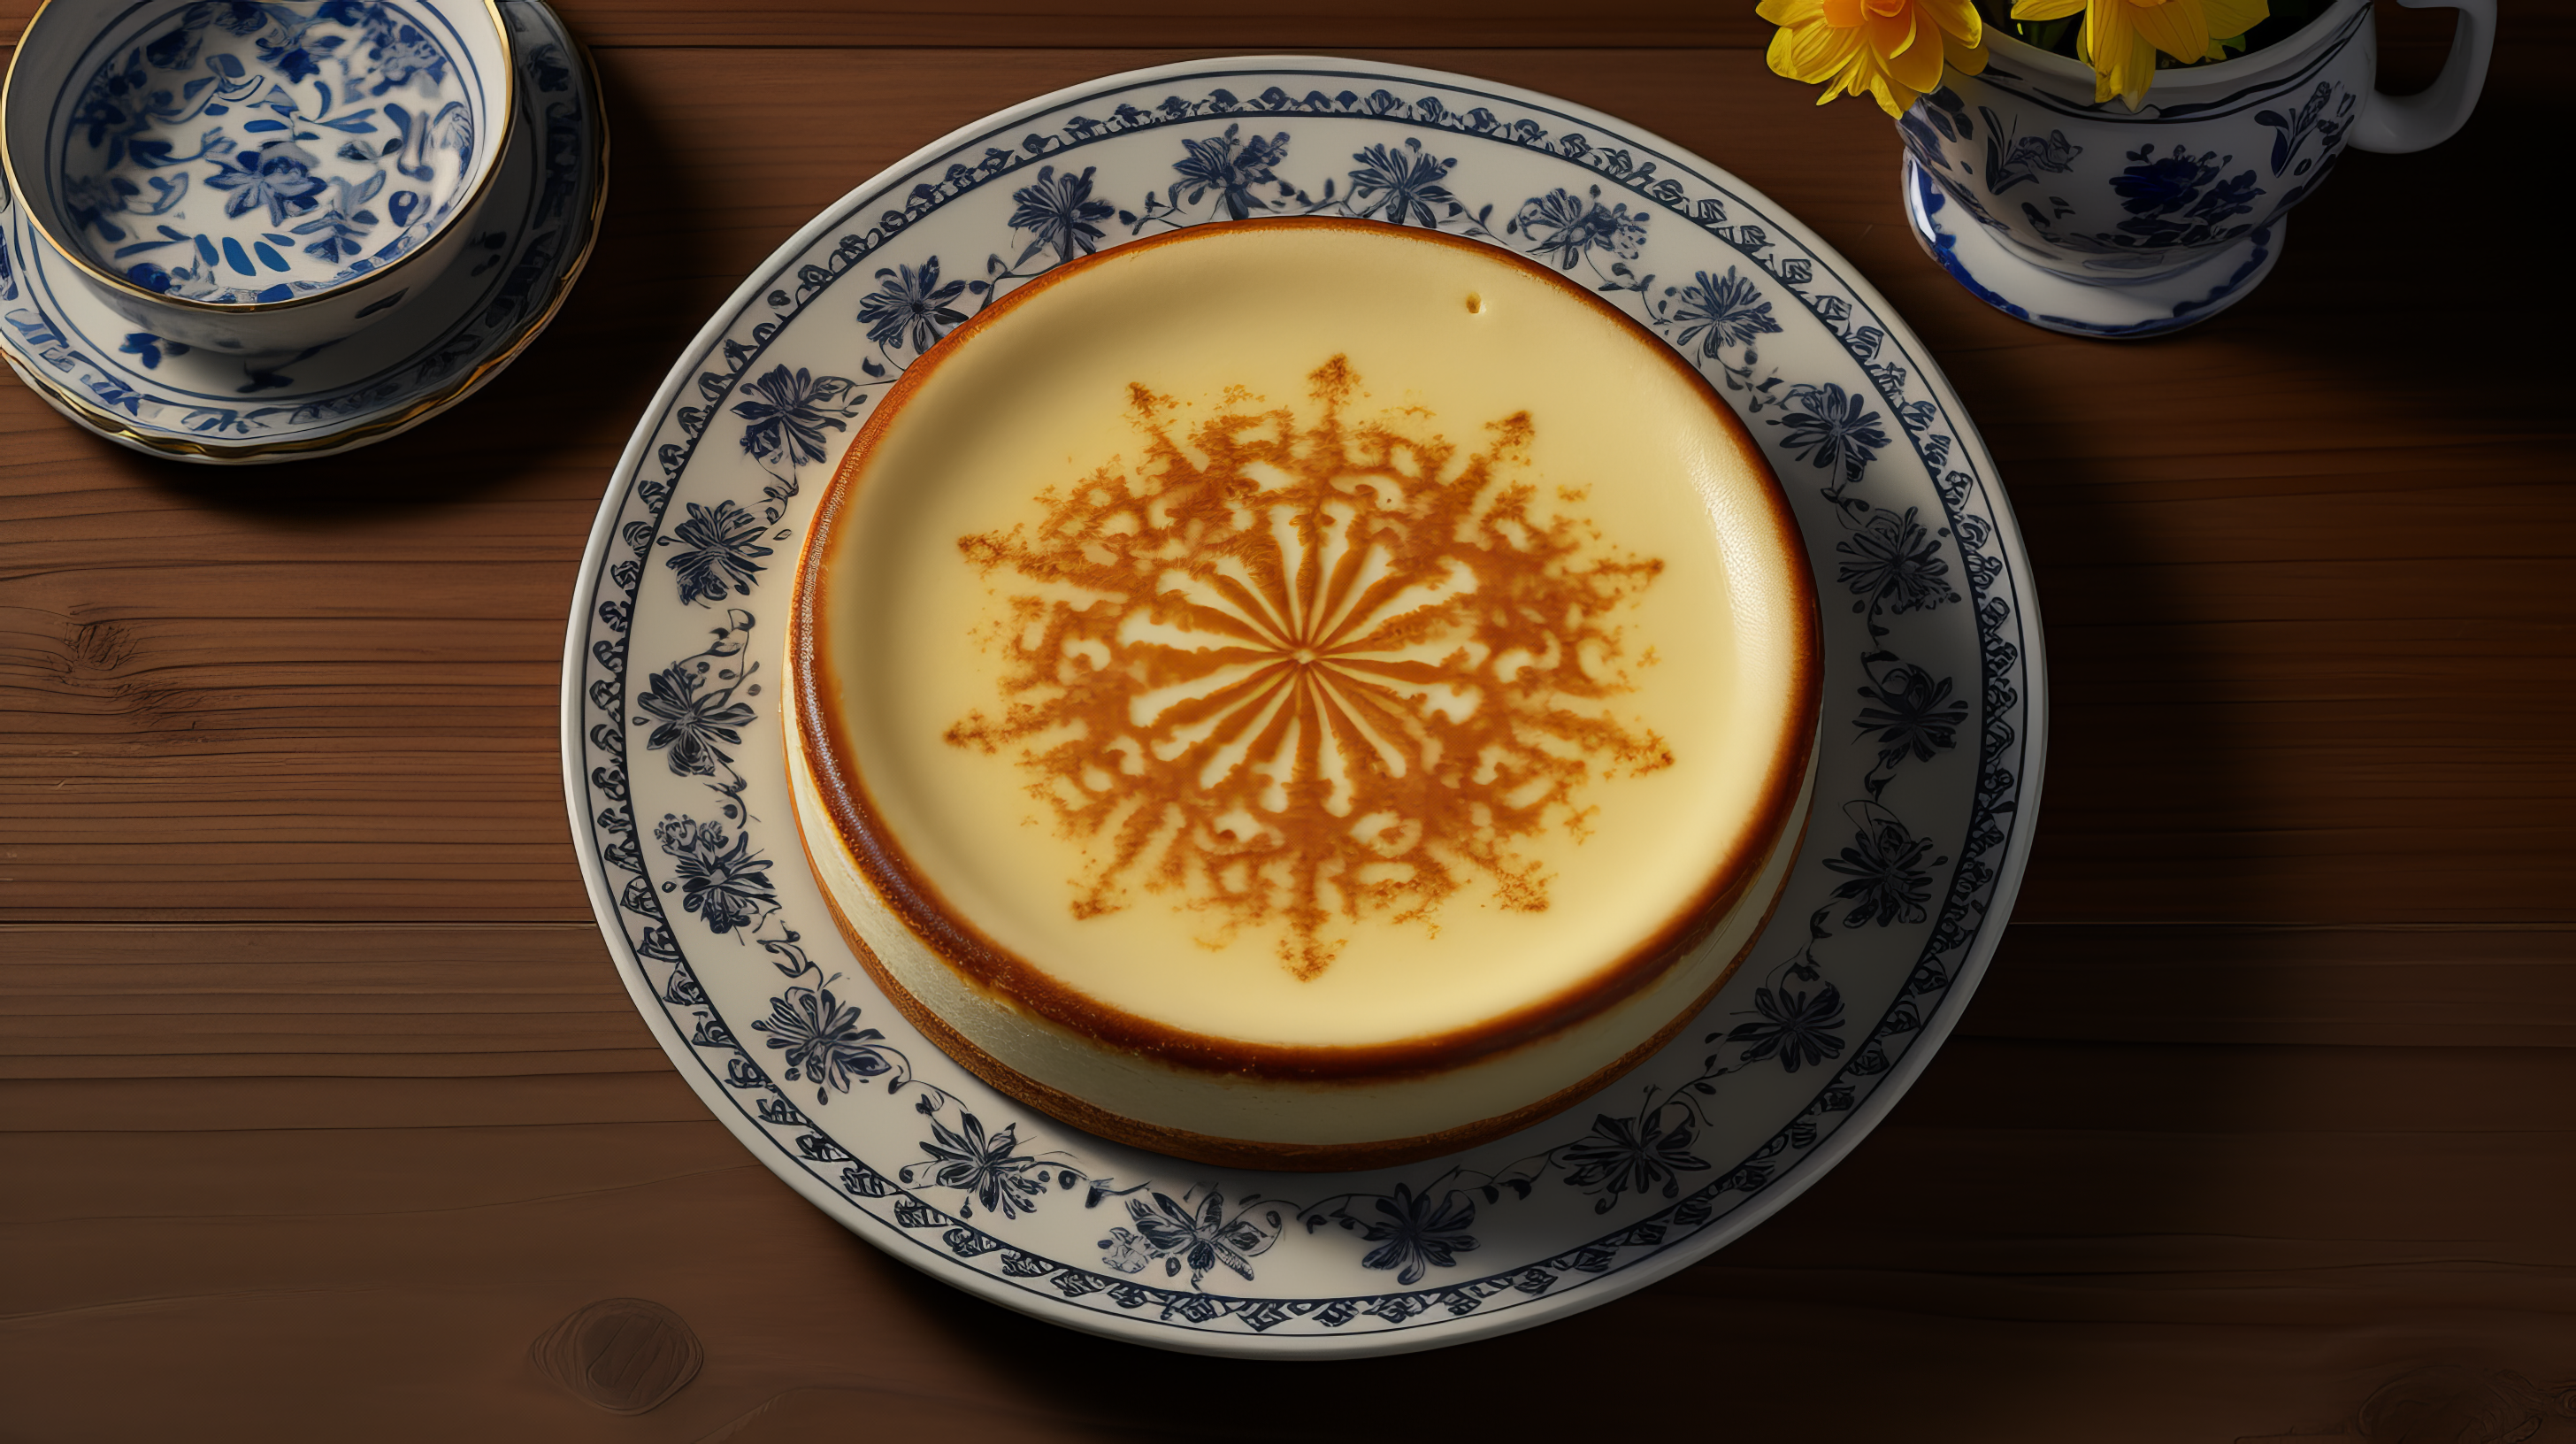 Food Cheesecake HD Wallpaper by Laxmonaut